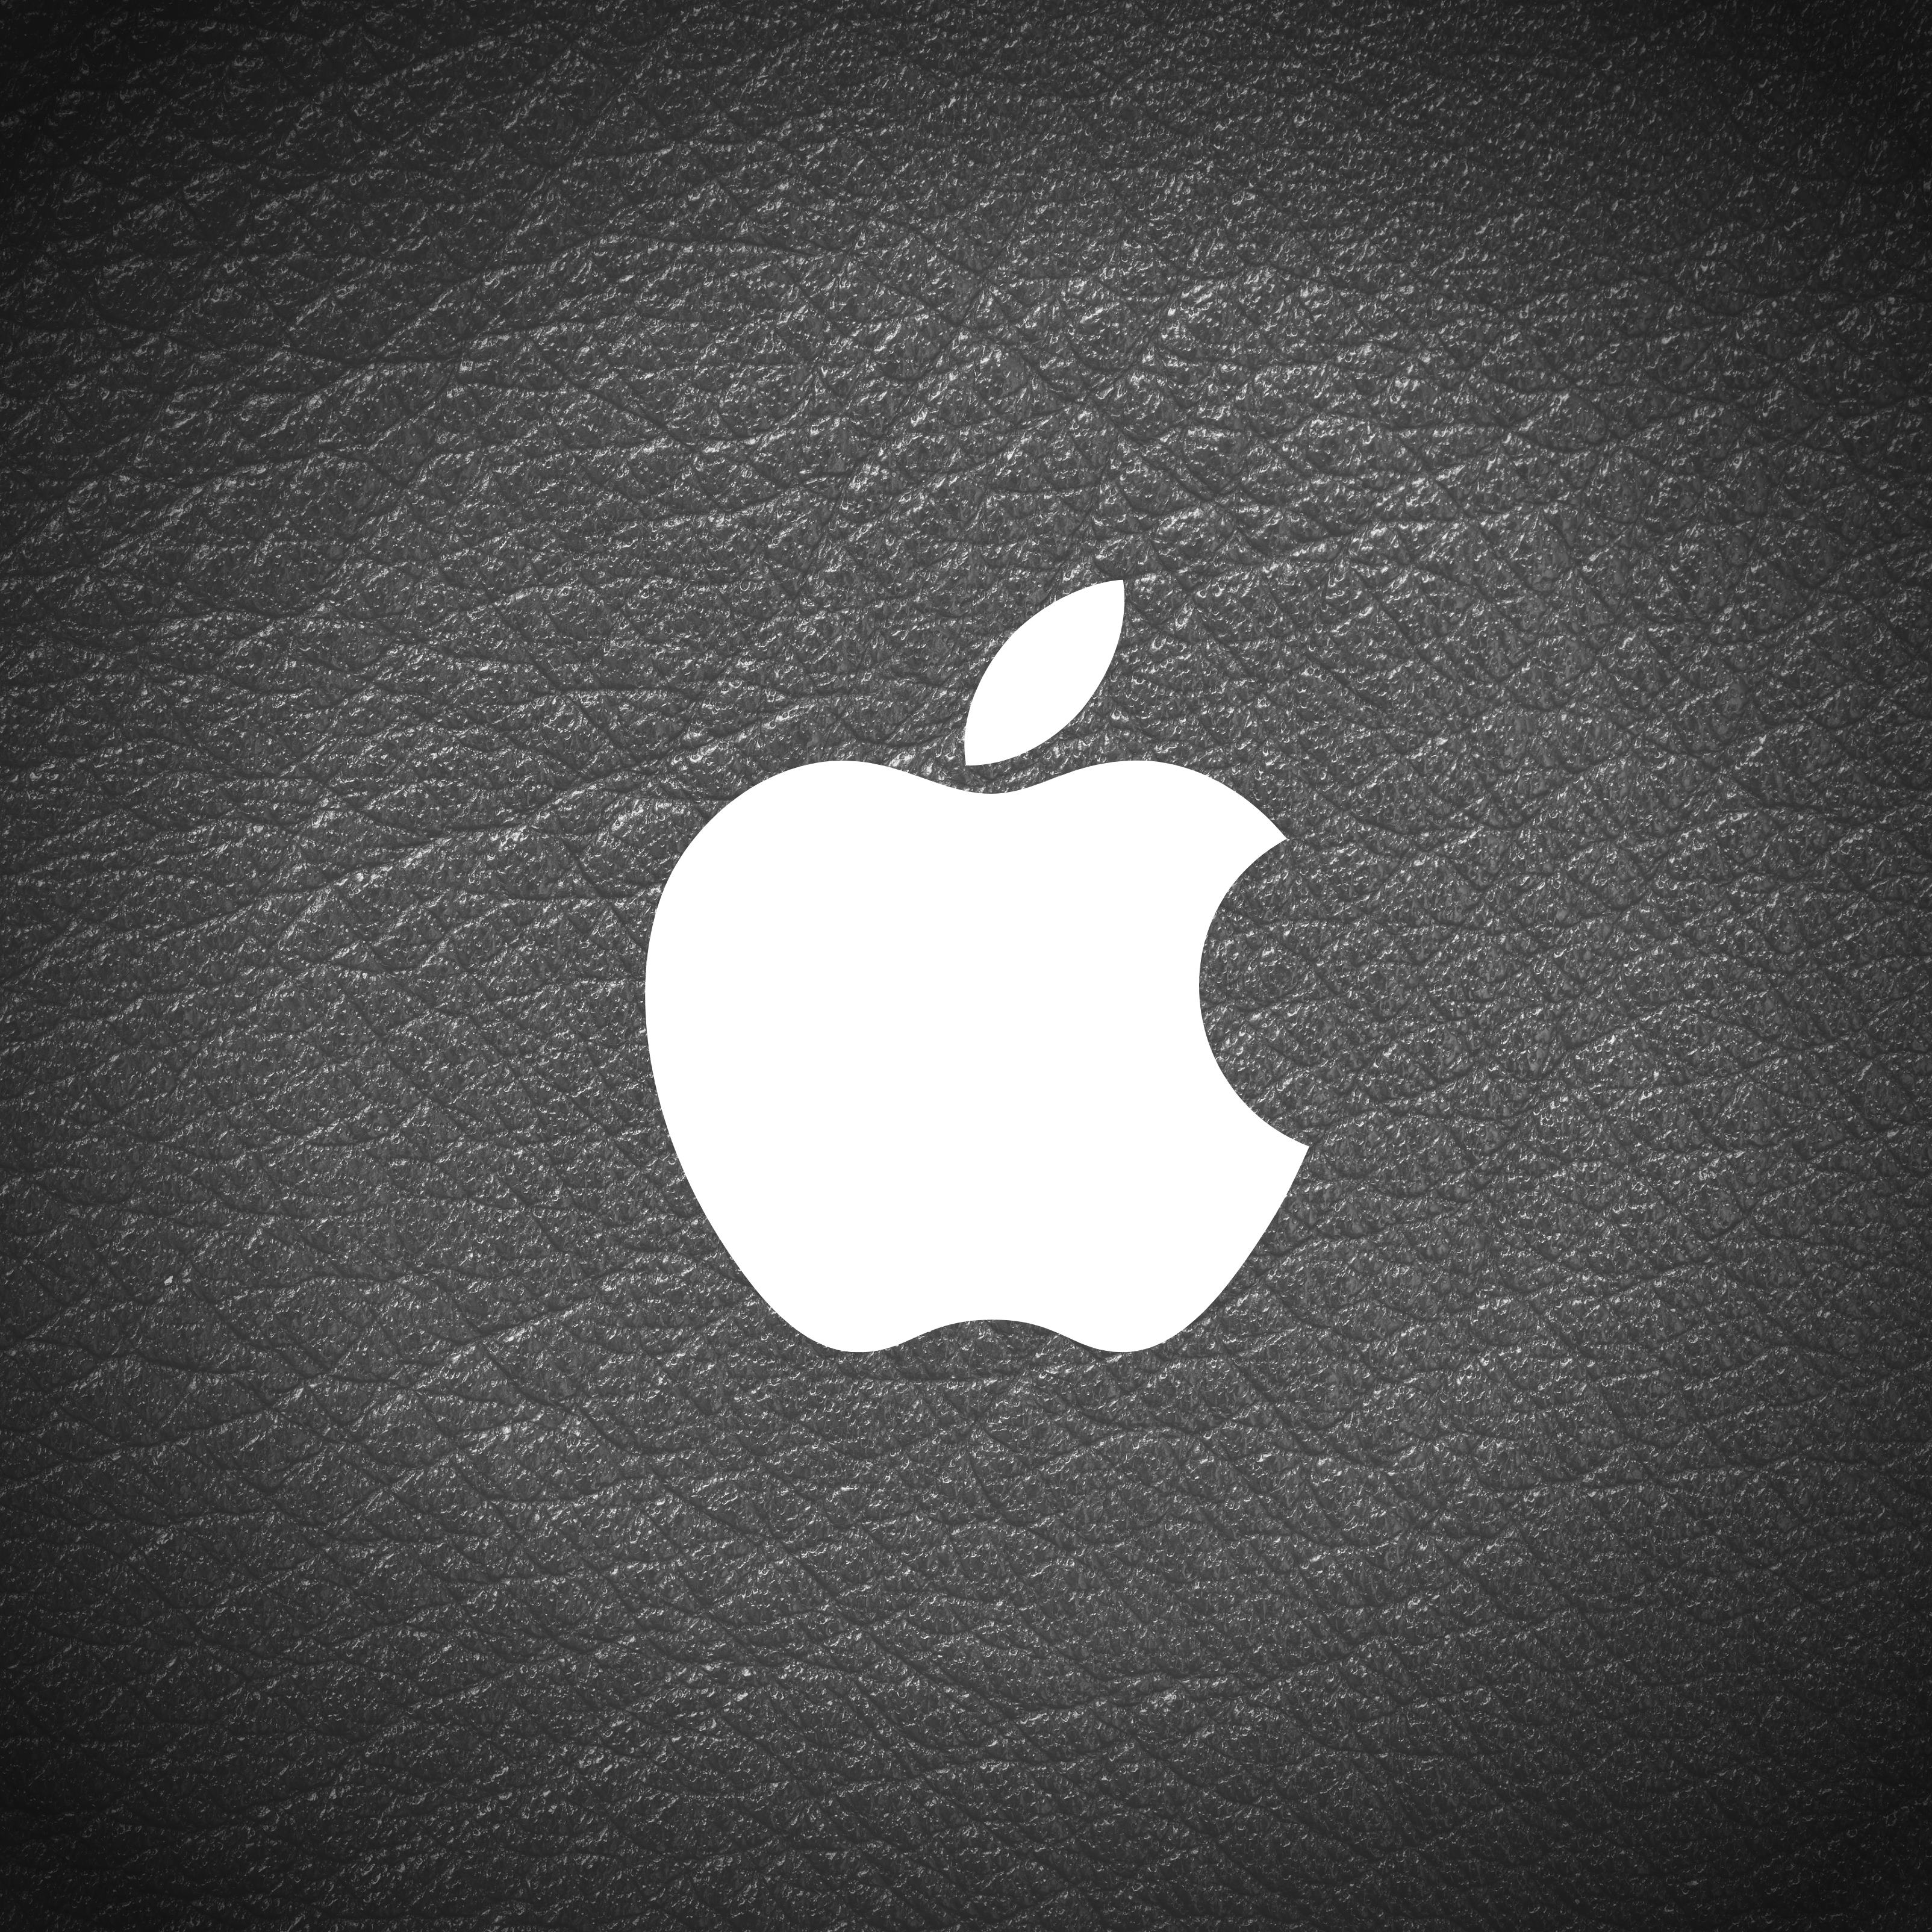 3208x3208 iPad Pro wallpaper 4k Apple Logo Leather Black and White iPad Wallpaper 3208x3208 pixels resolution